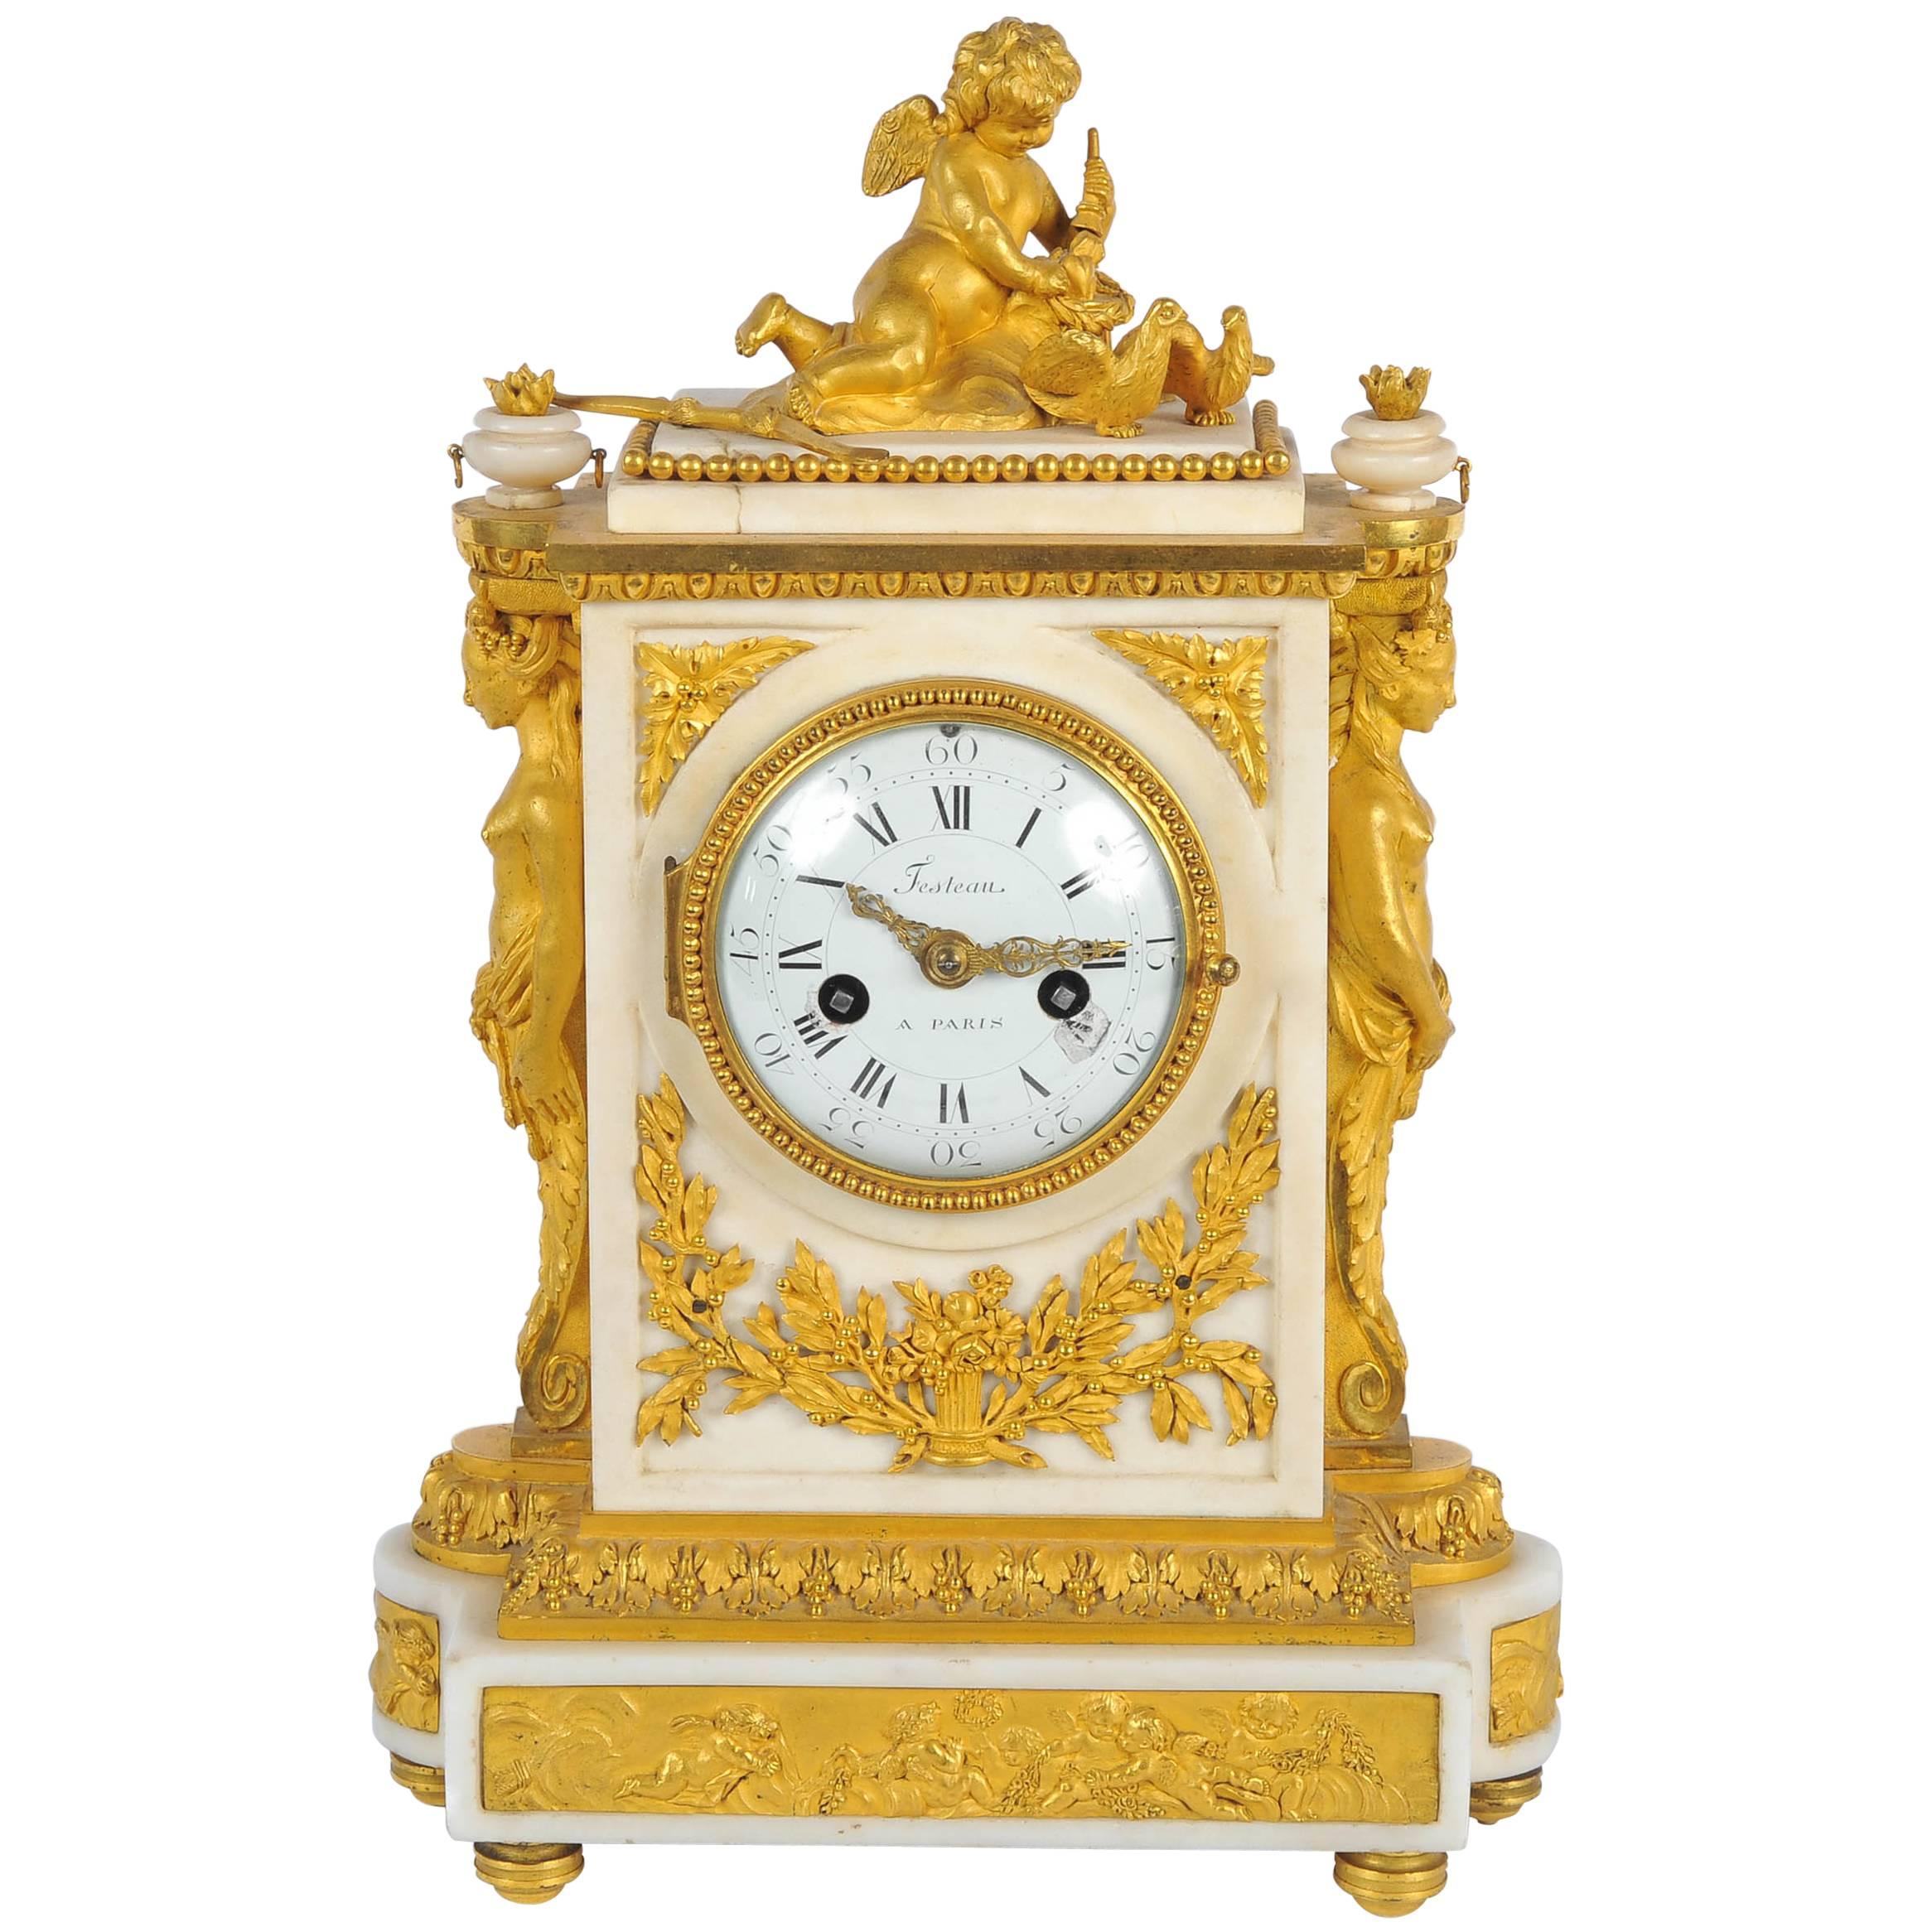 19th Century French Mantel Clock, Louis XVI style, by Festeau, Paris